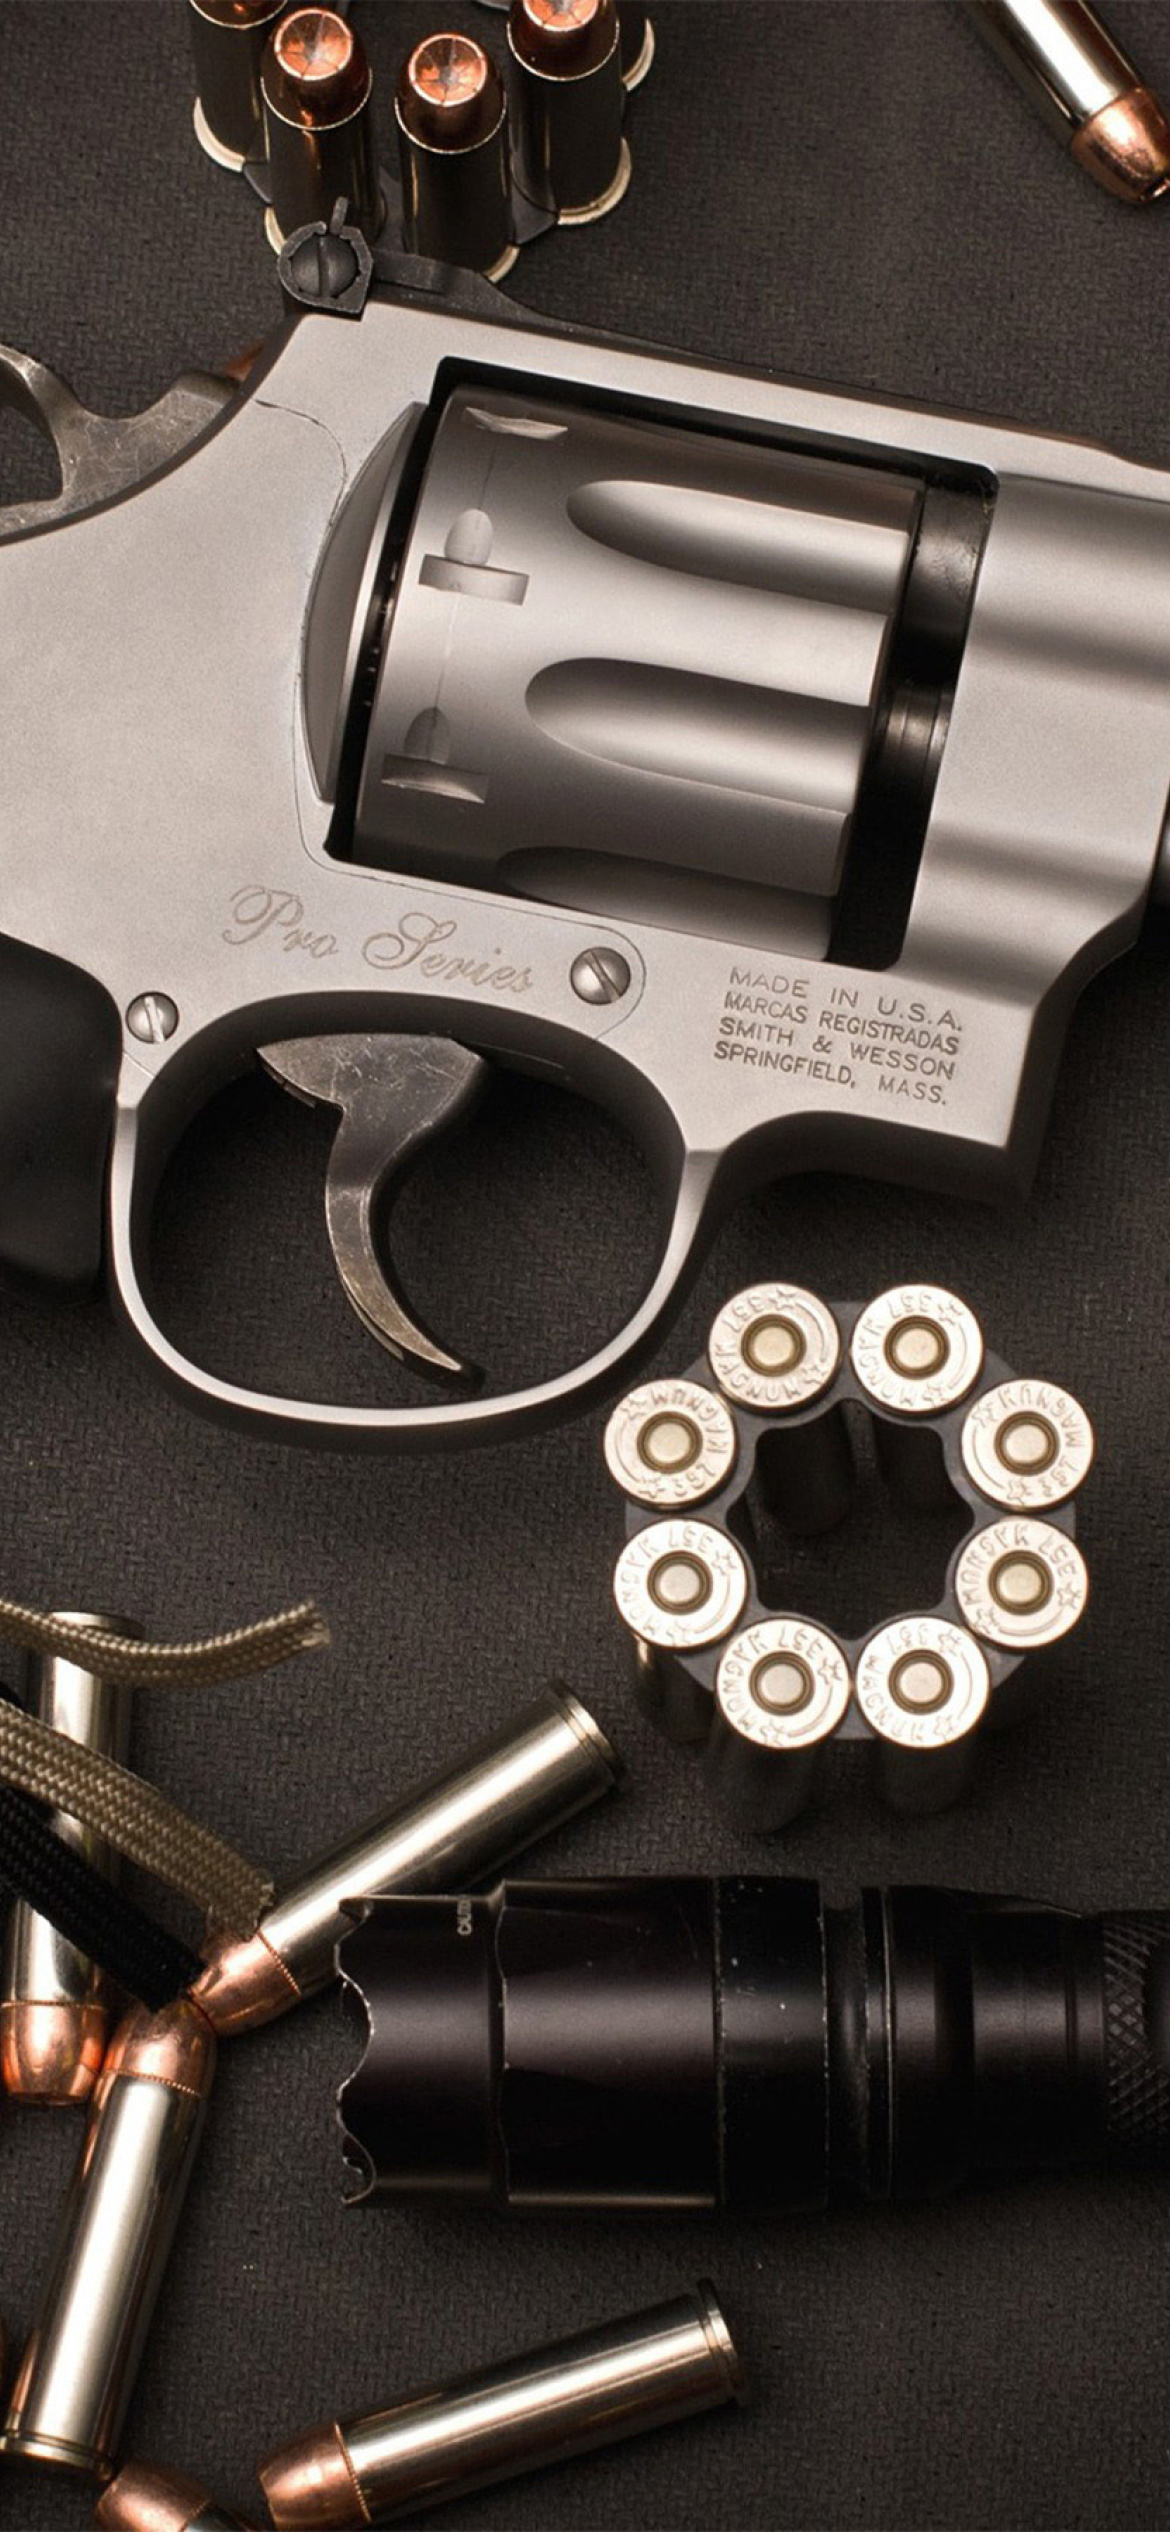 Das Smith & Wesson Revolver Wallpaper 1170x2532